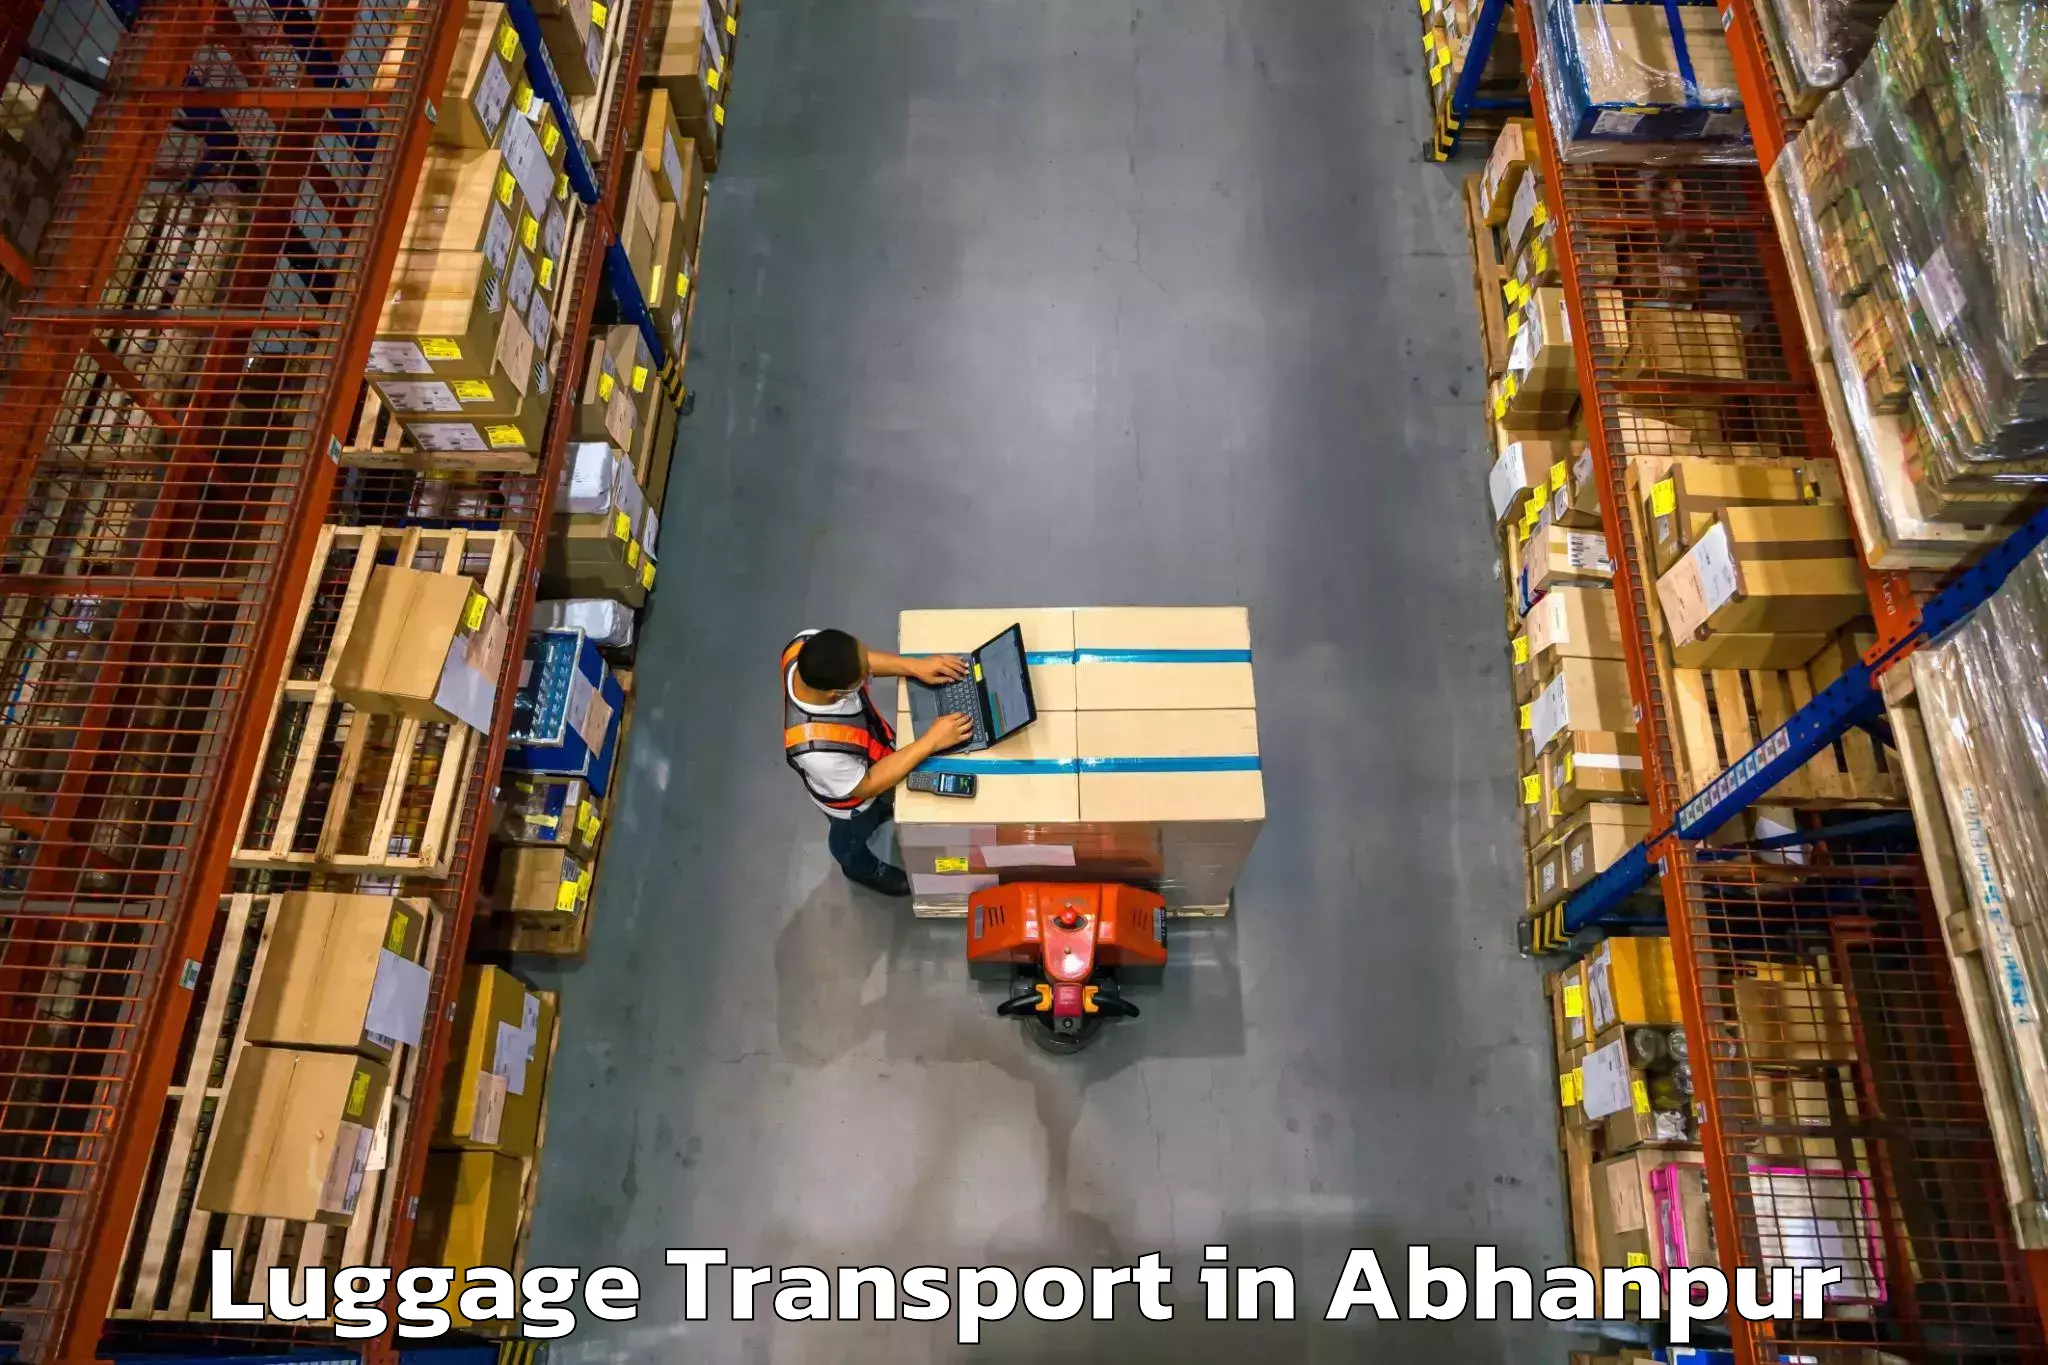 Regional luggage transport in Abhanpur